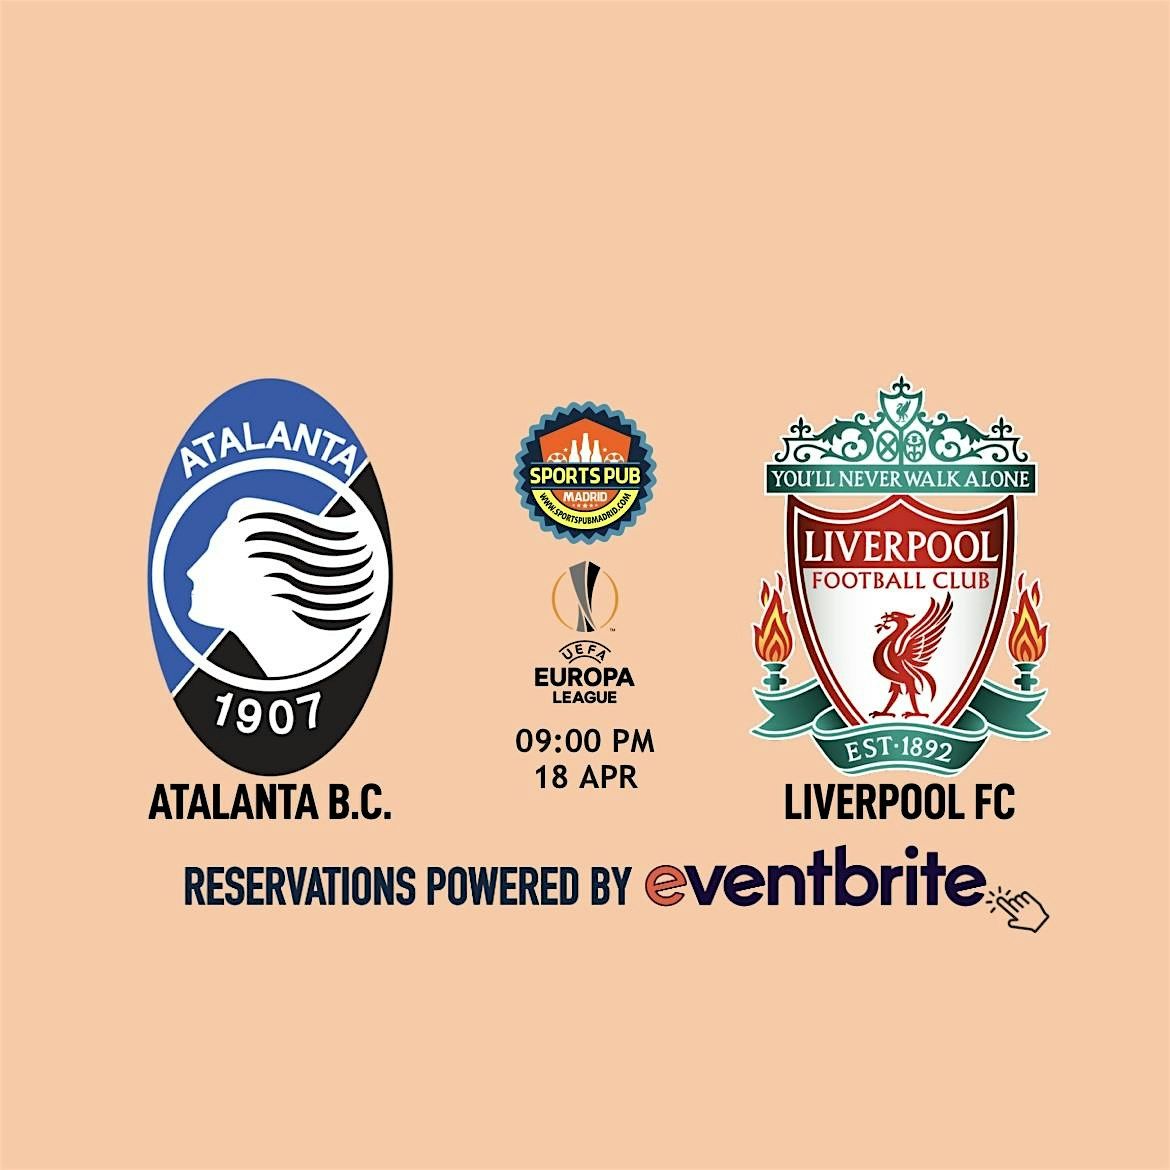 Atalanta v Liverpool | Europa League - Sports Pub La Latina